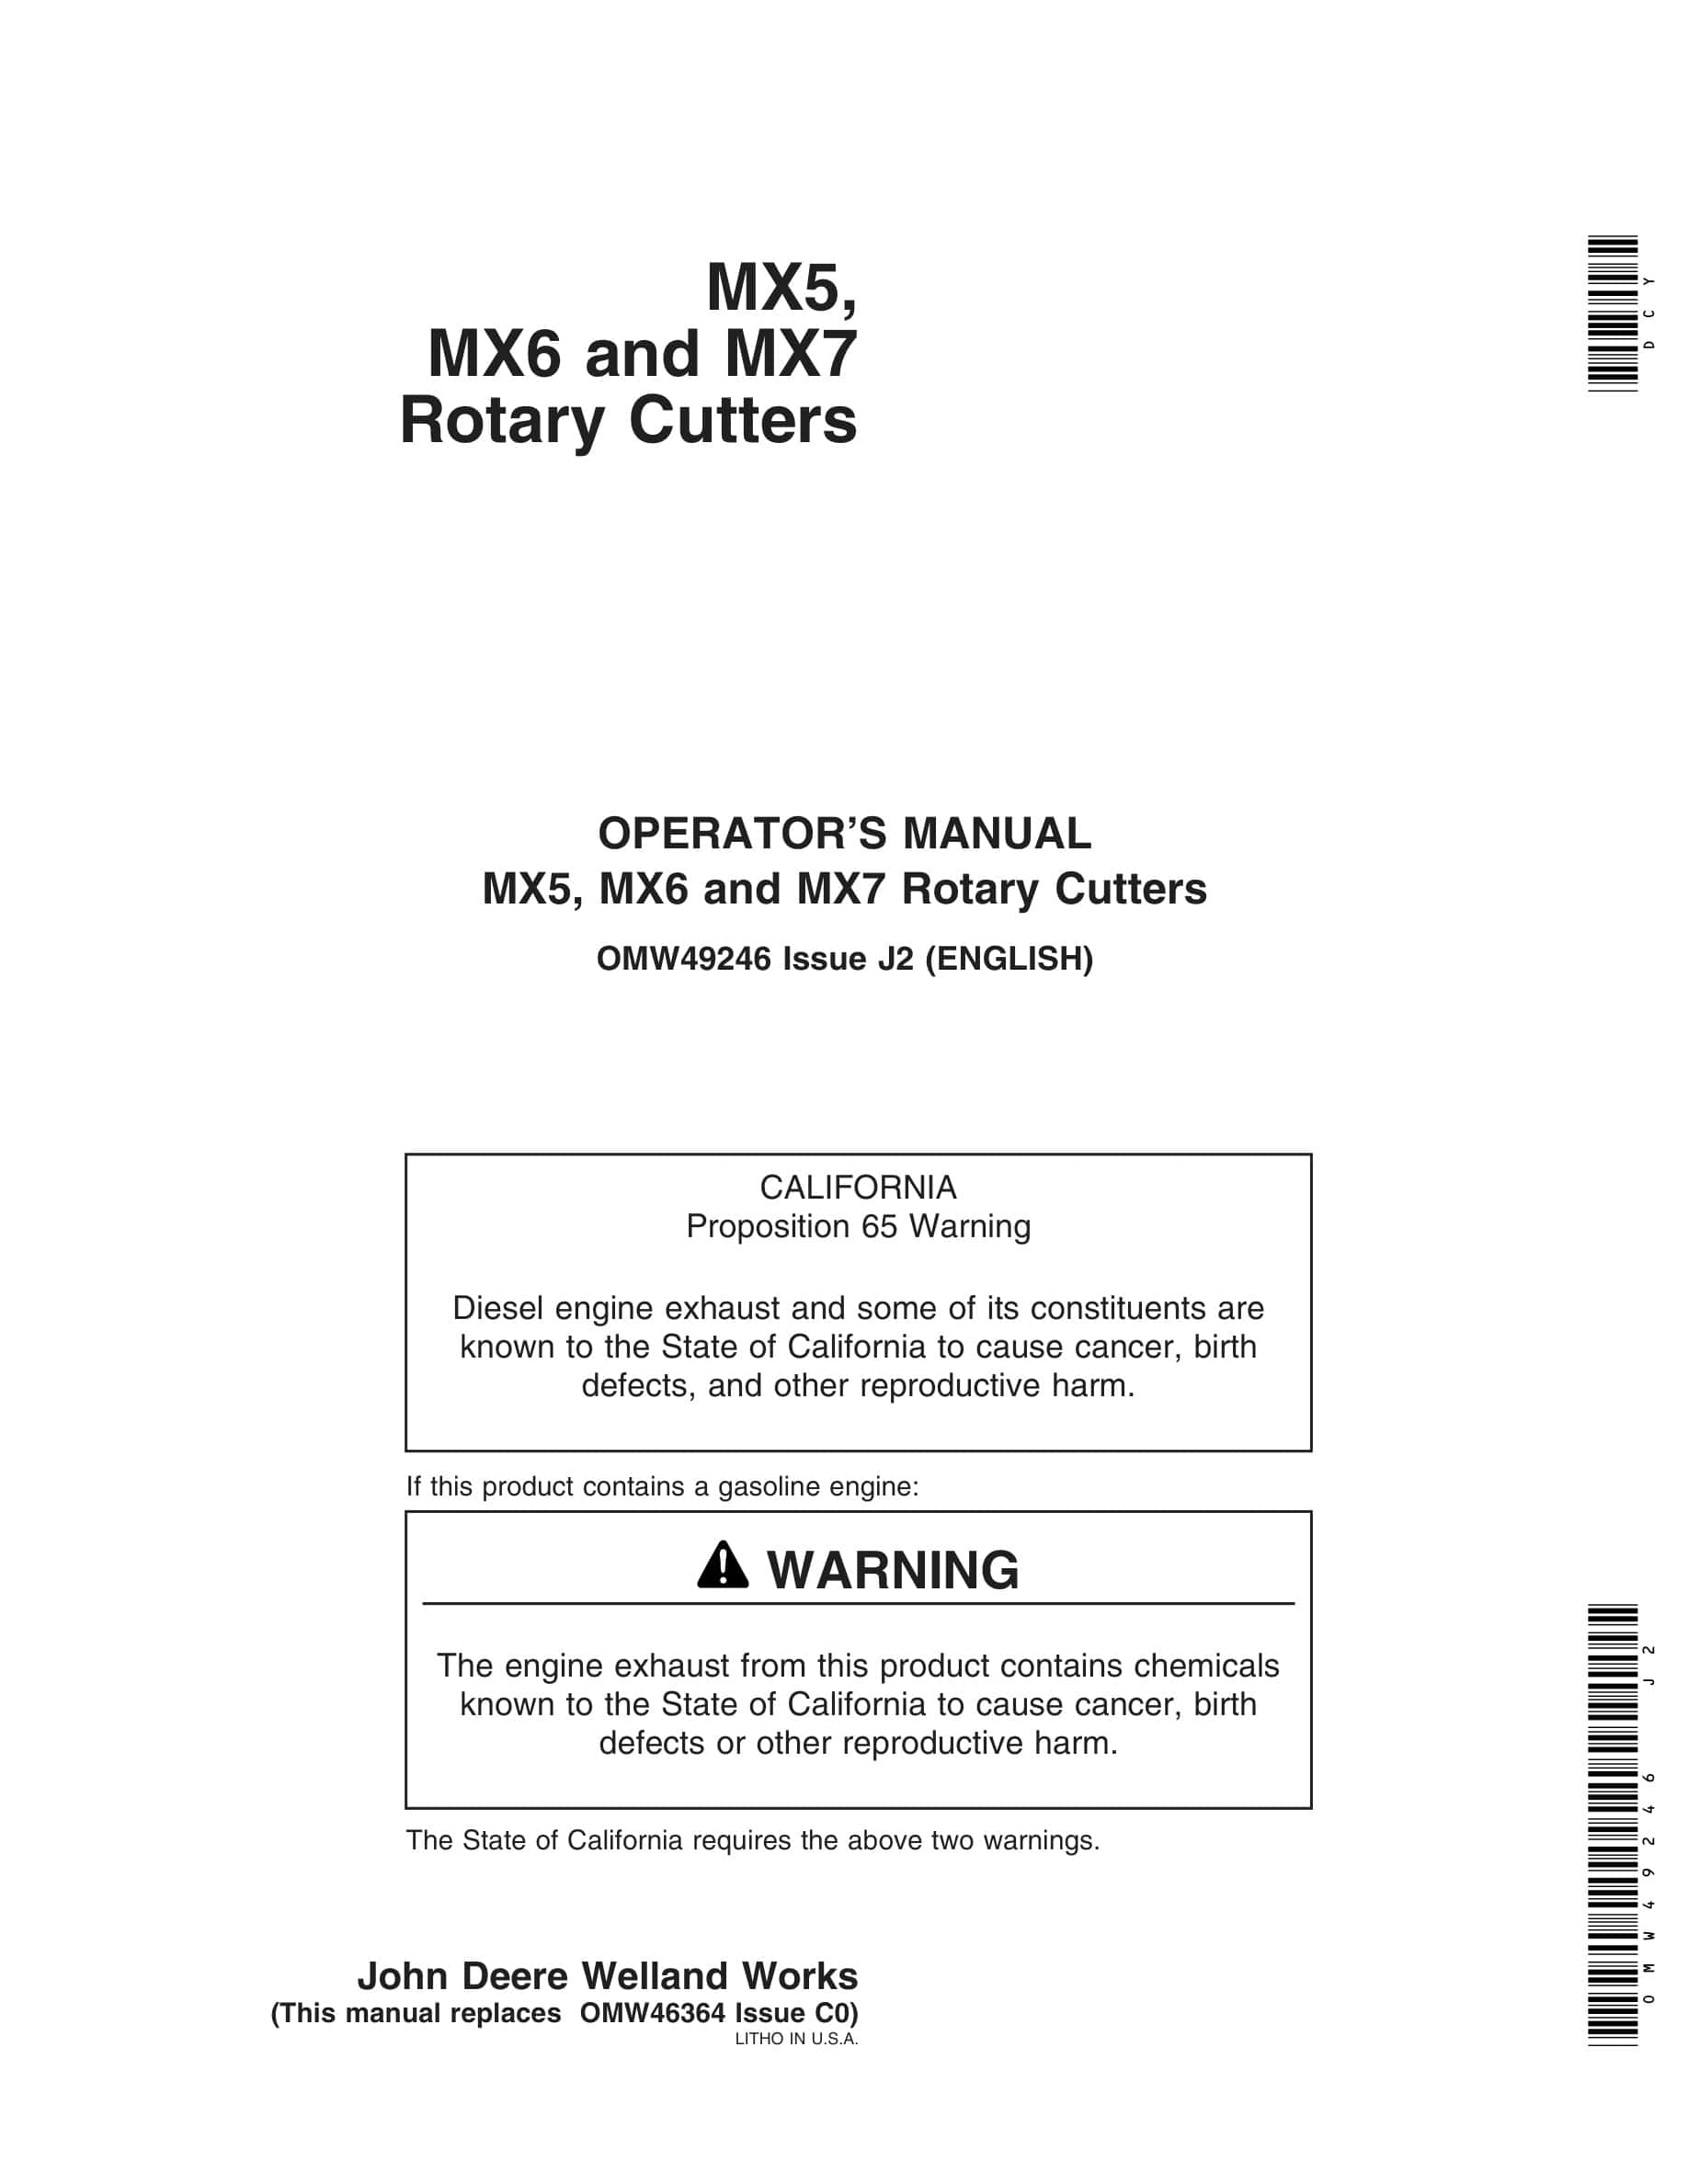 John Deere MX5, MX6 and MX7 Rotary Cutter Operator Manual OMW49246-1